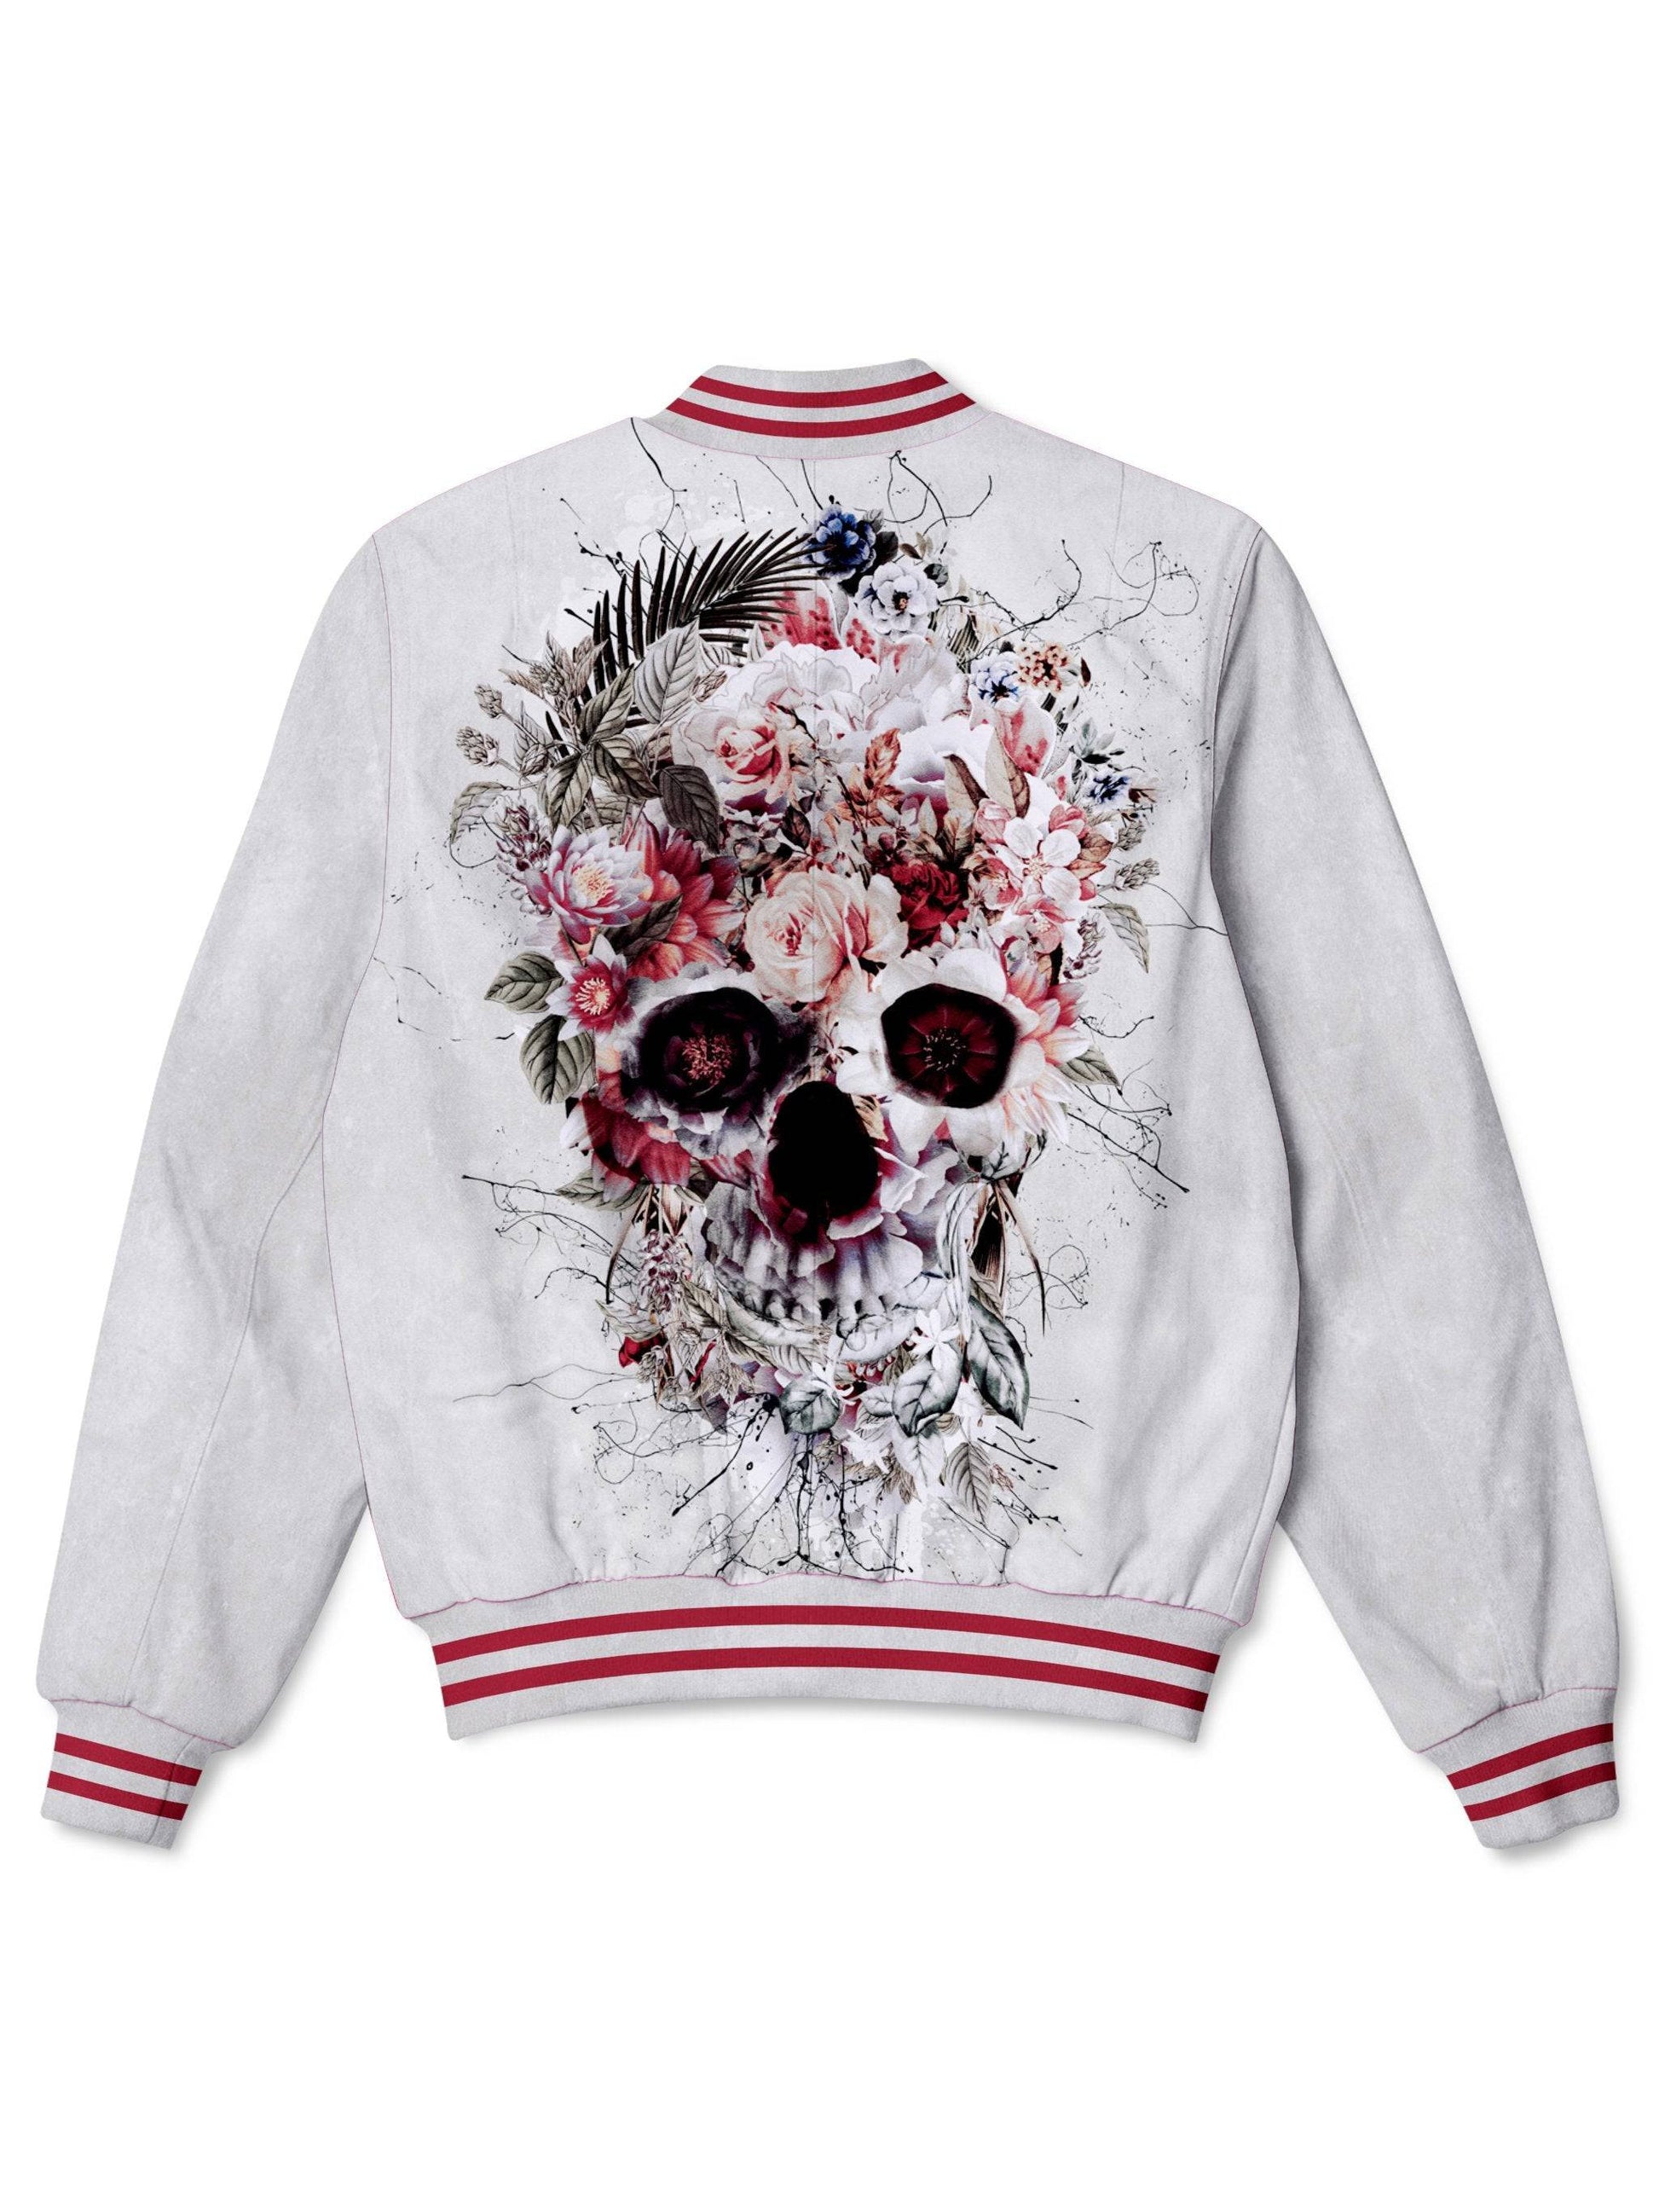 Floral Skull Bomber Jacket, Riza Peker, | iEDM